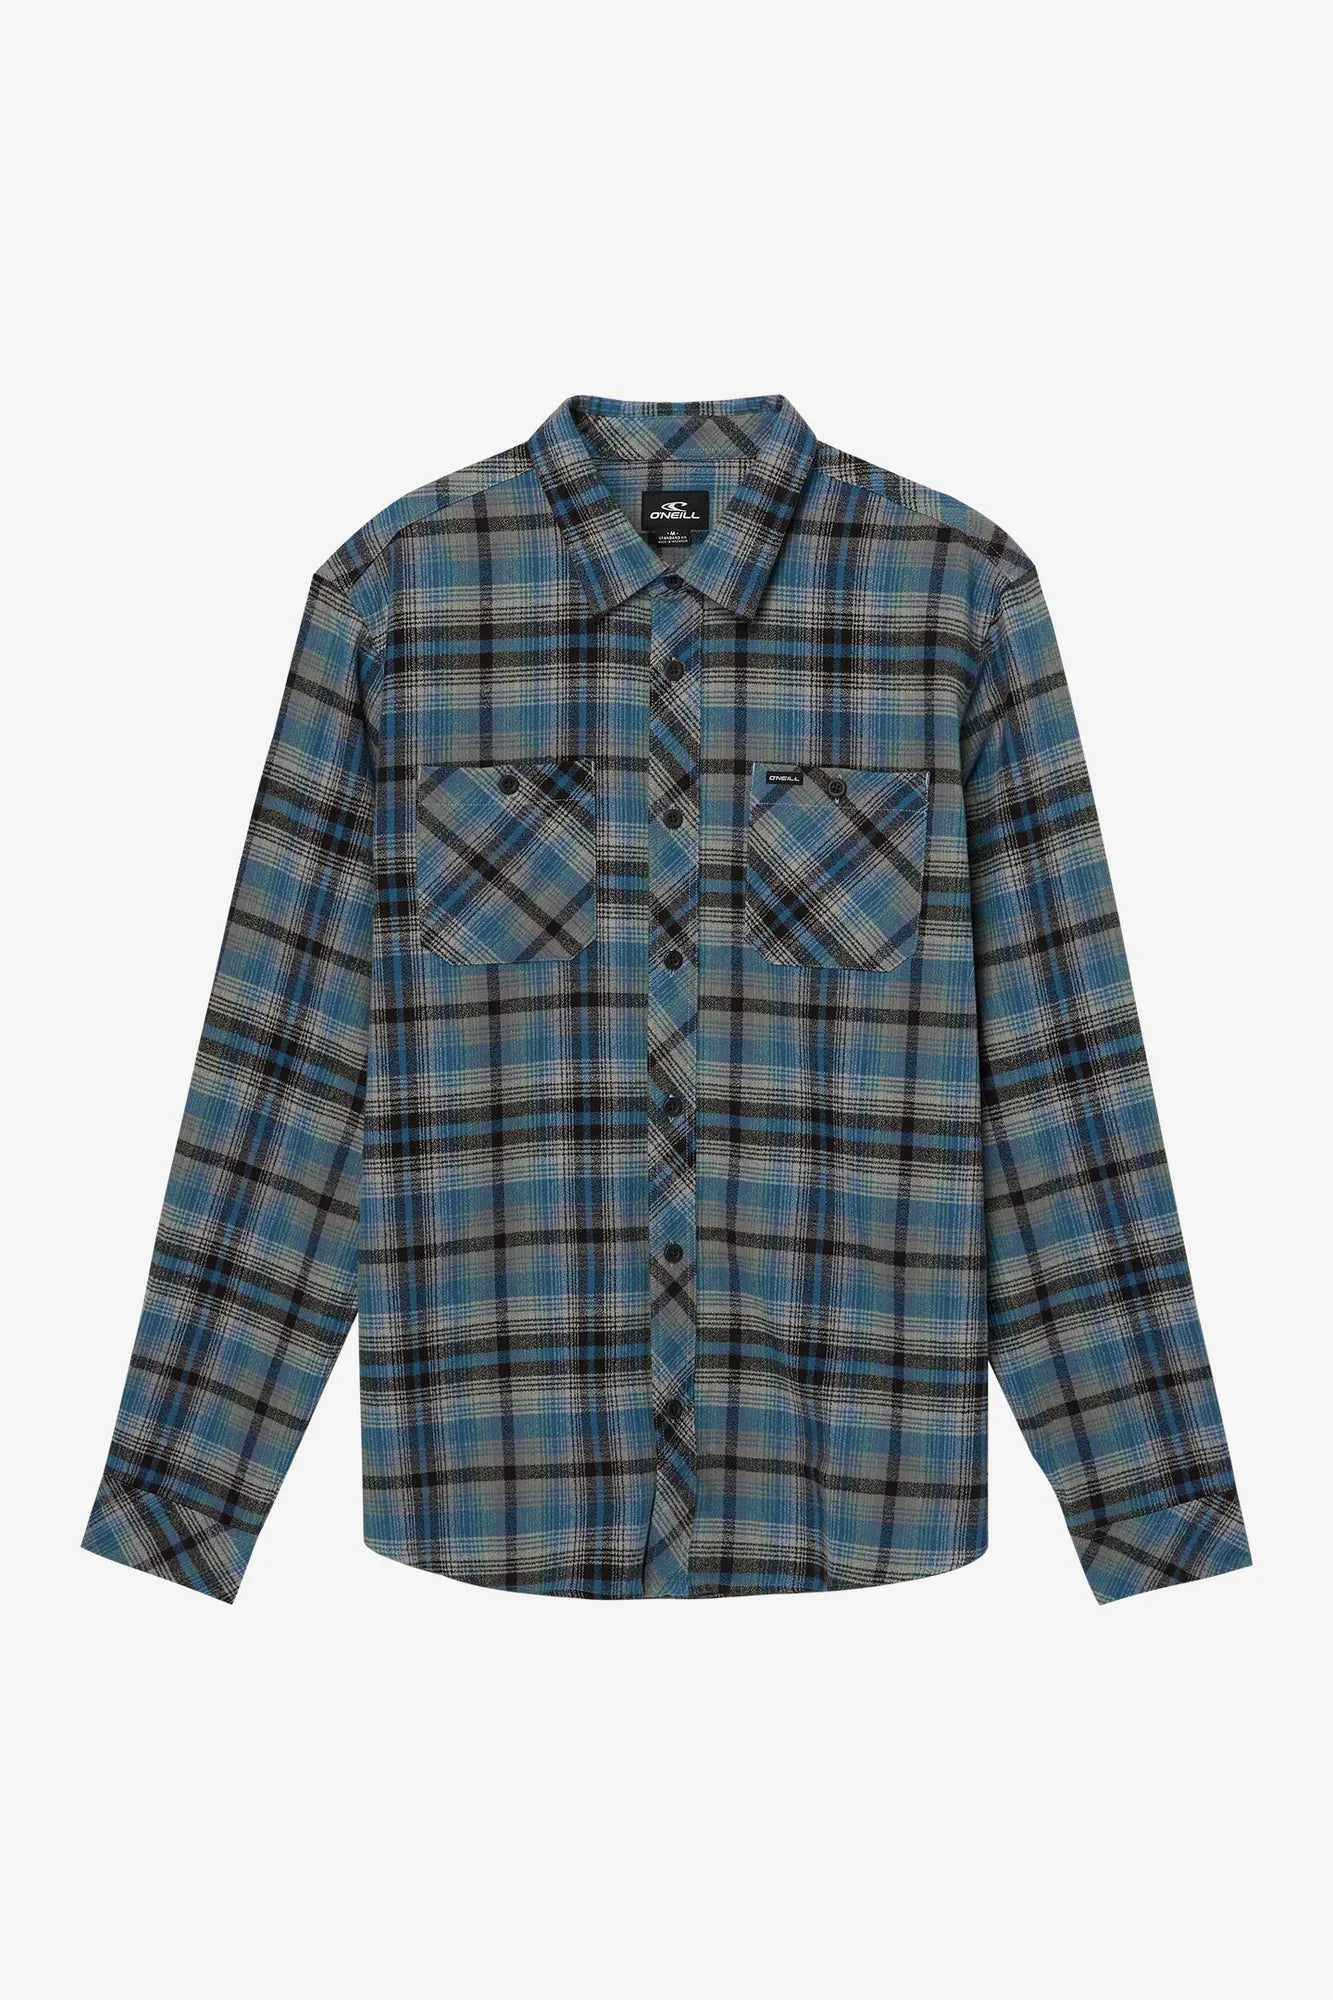 O'Neill Men's Whittaker Plaid Flannel Shirt